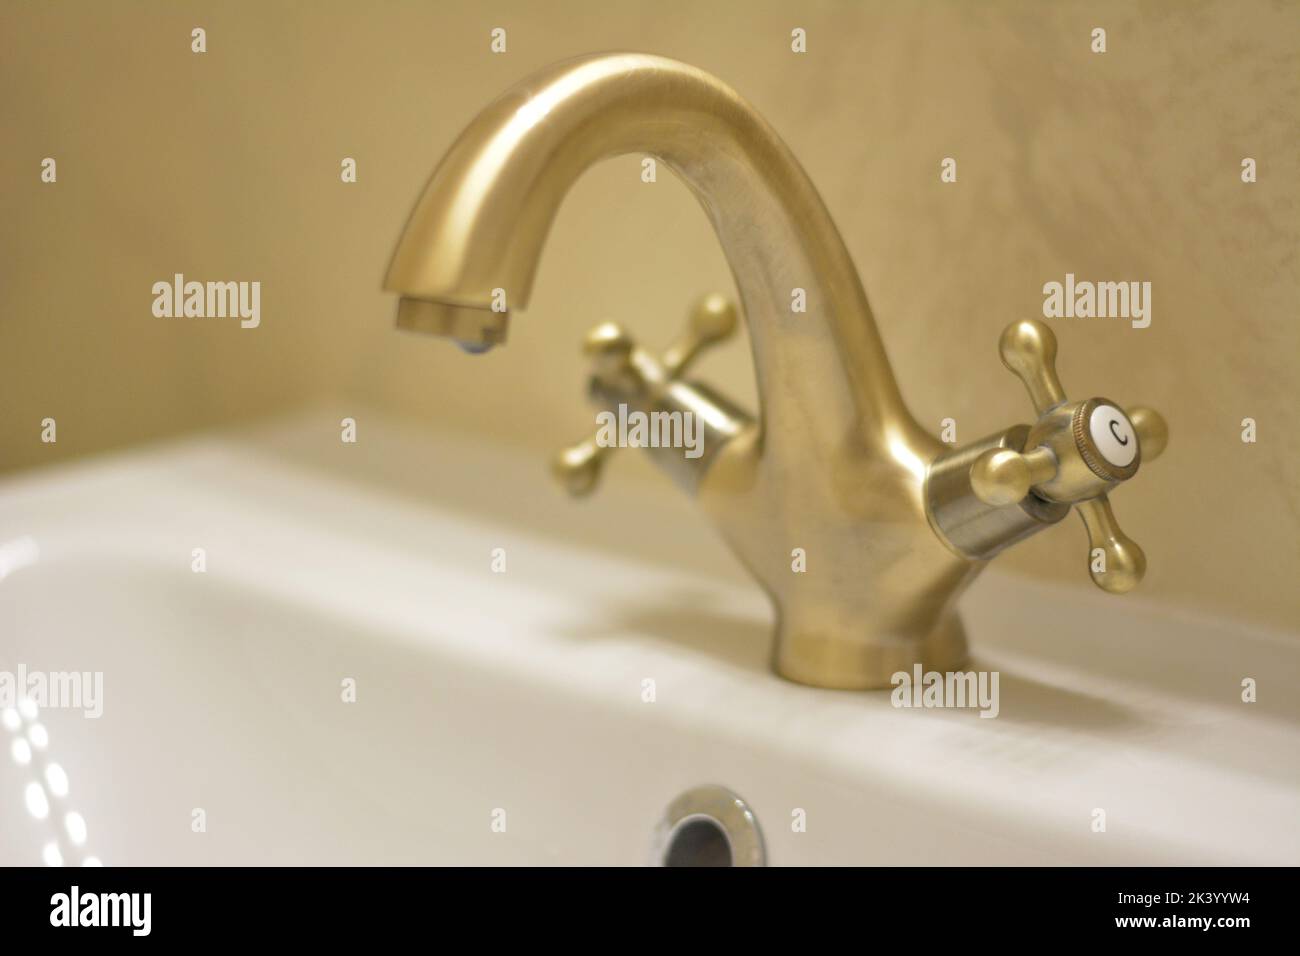 Bathroom faucet Stock Photo